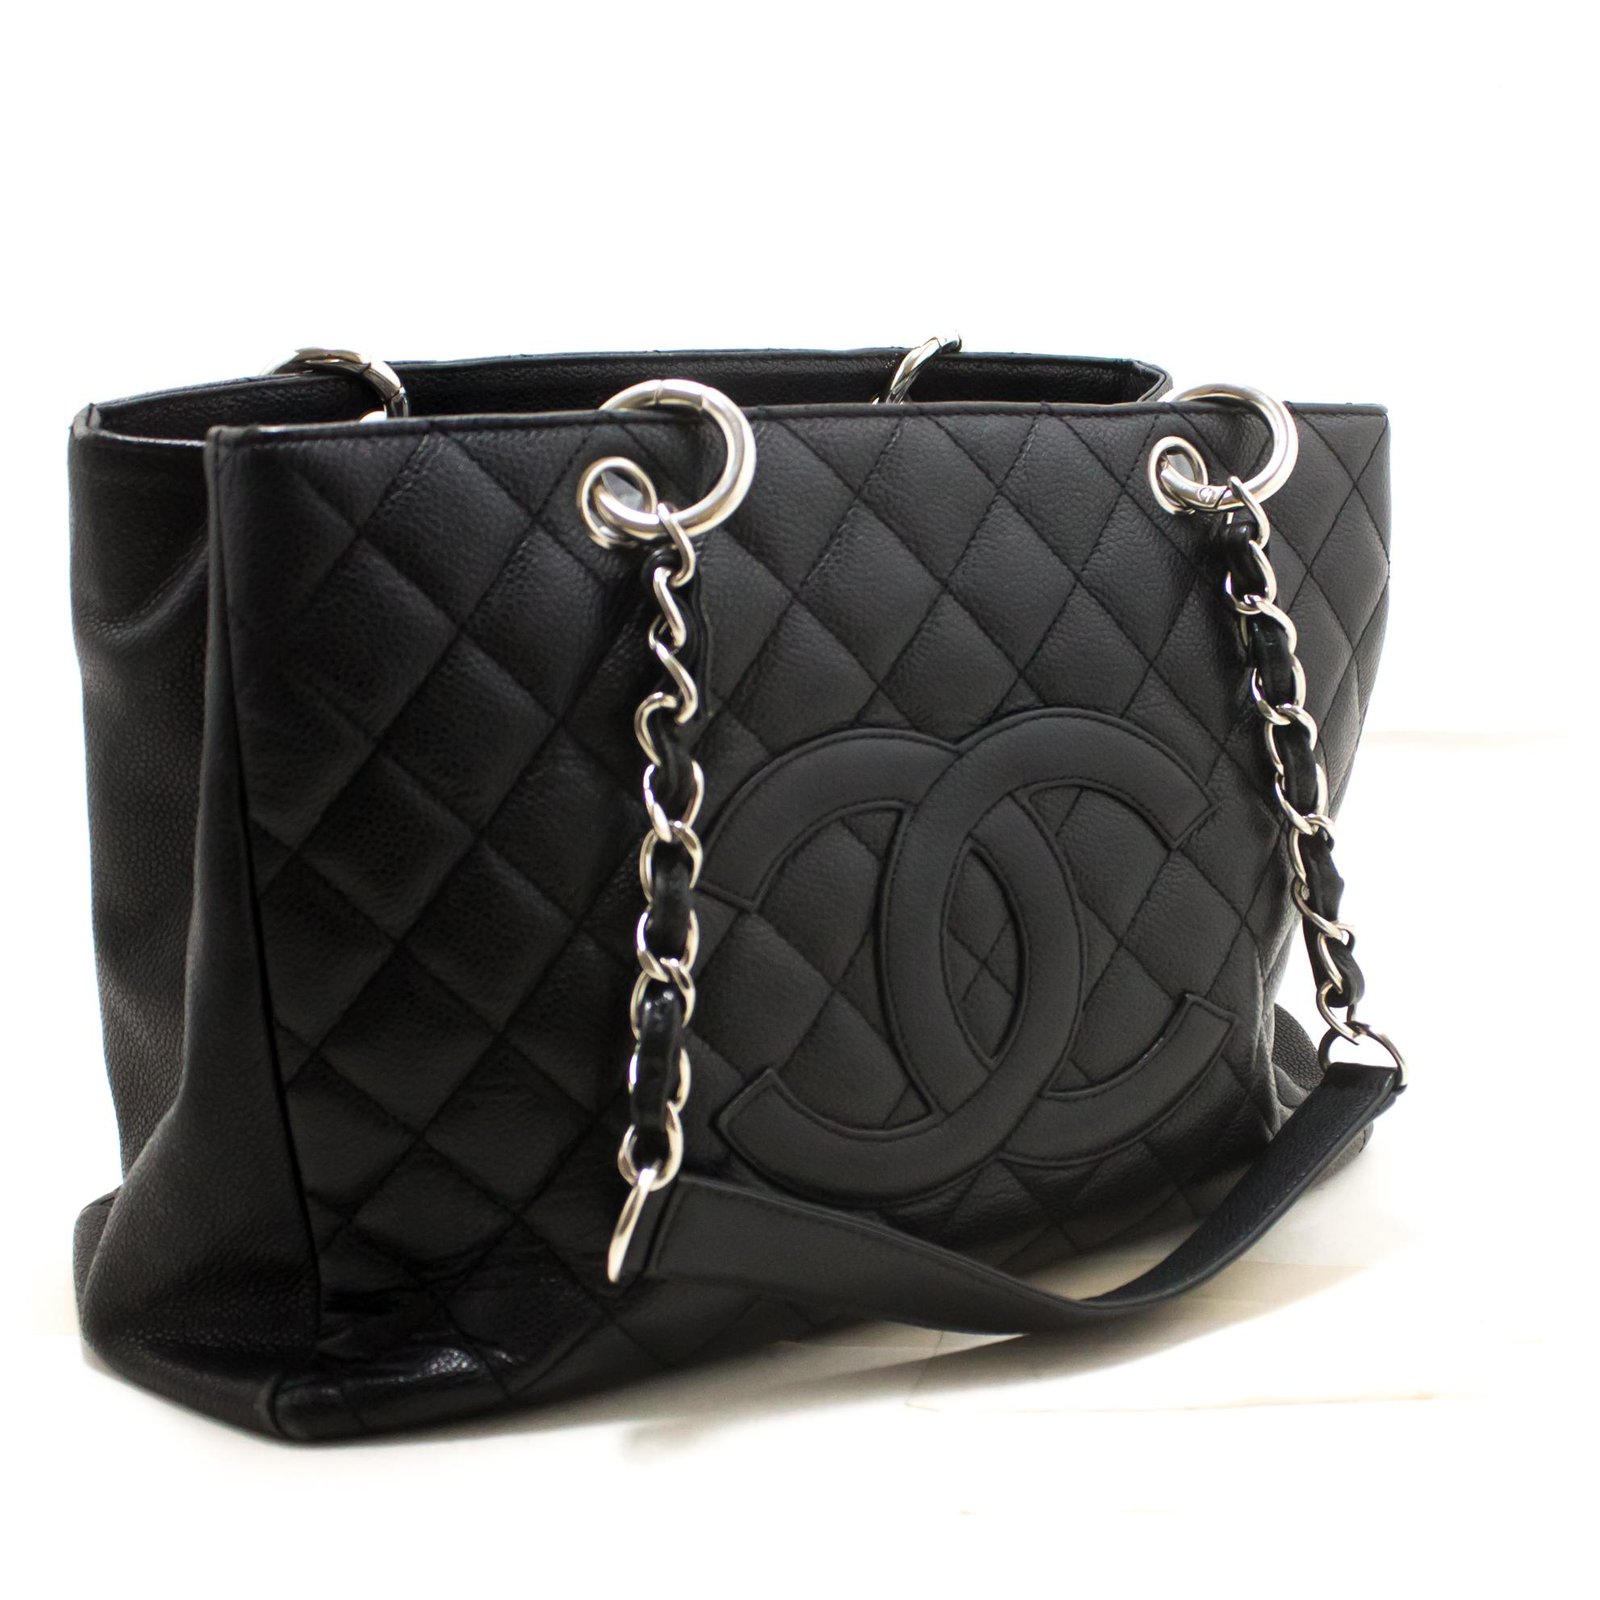 Chanel Tote Handbags Ukg Pro | semashow.com